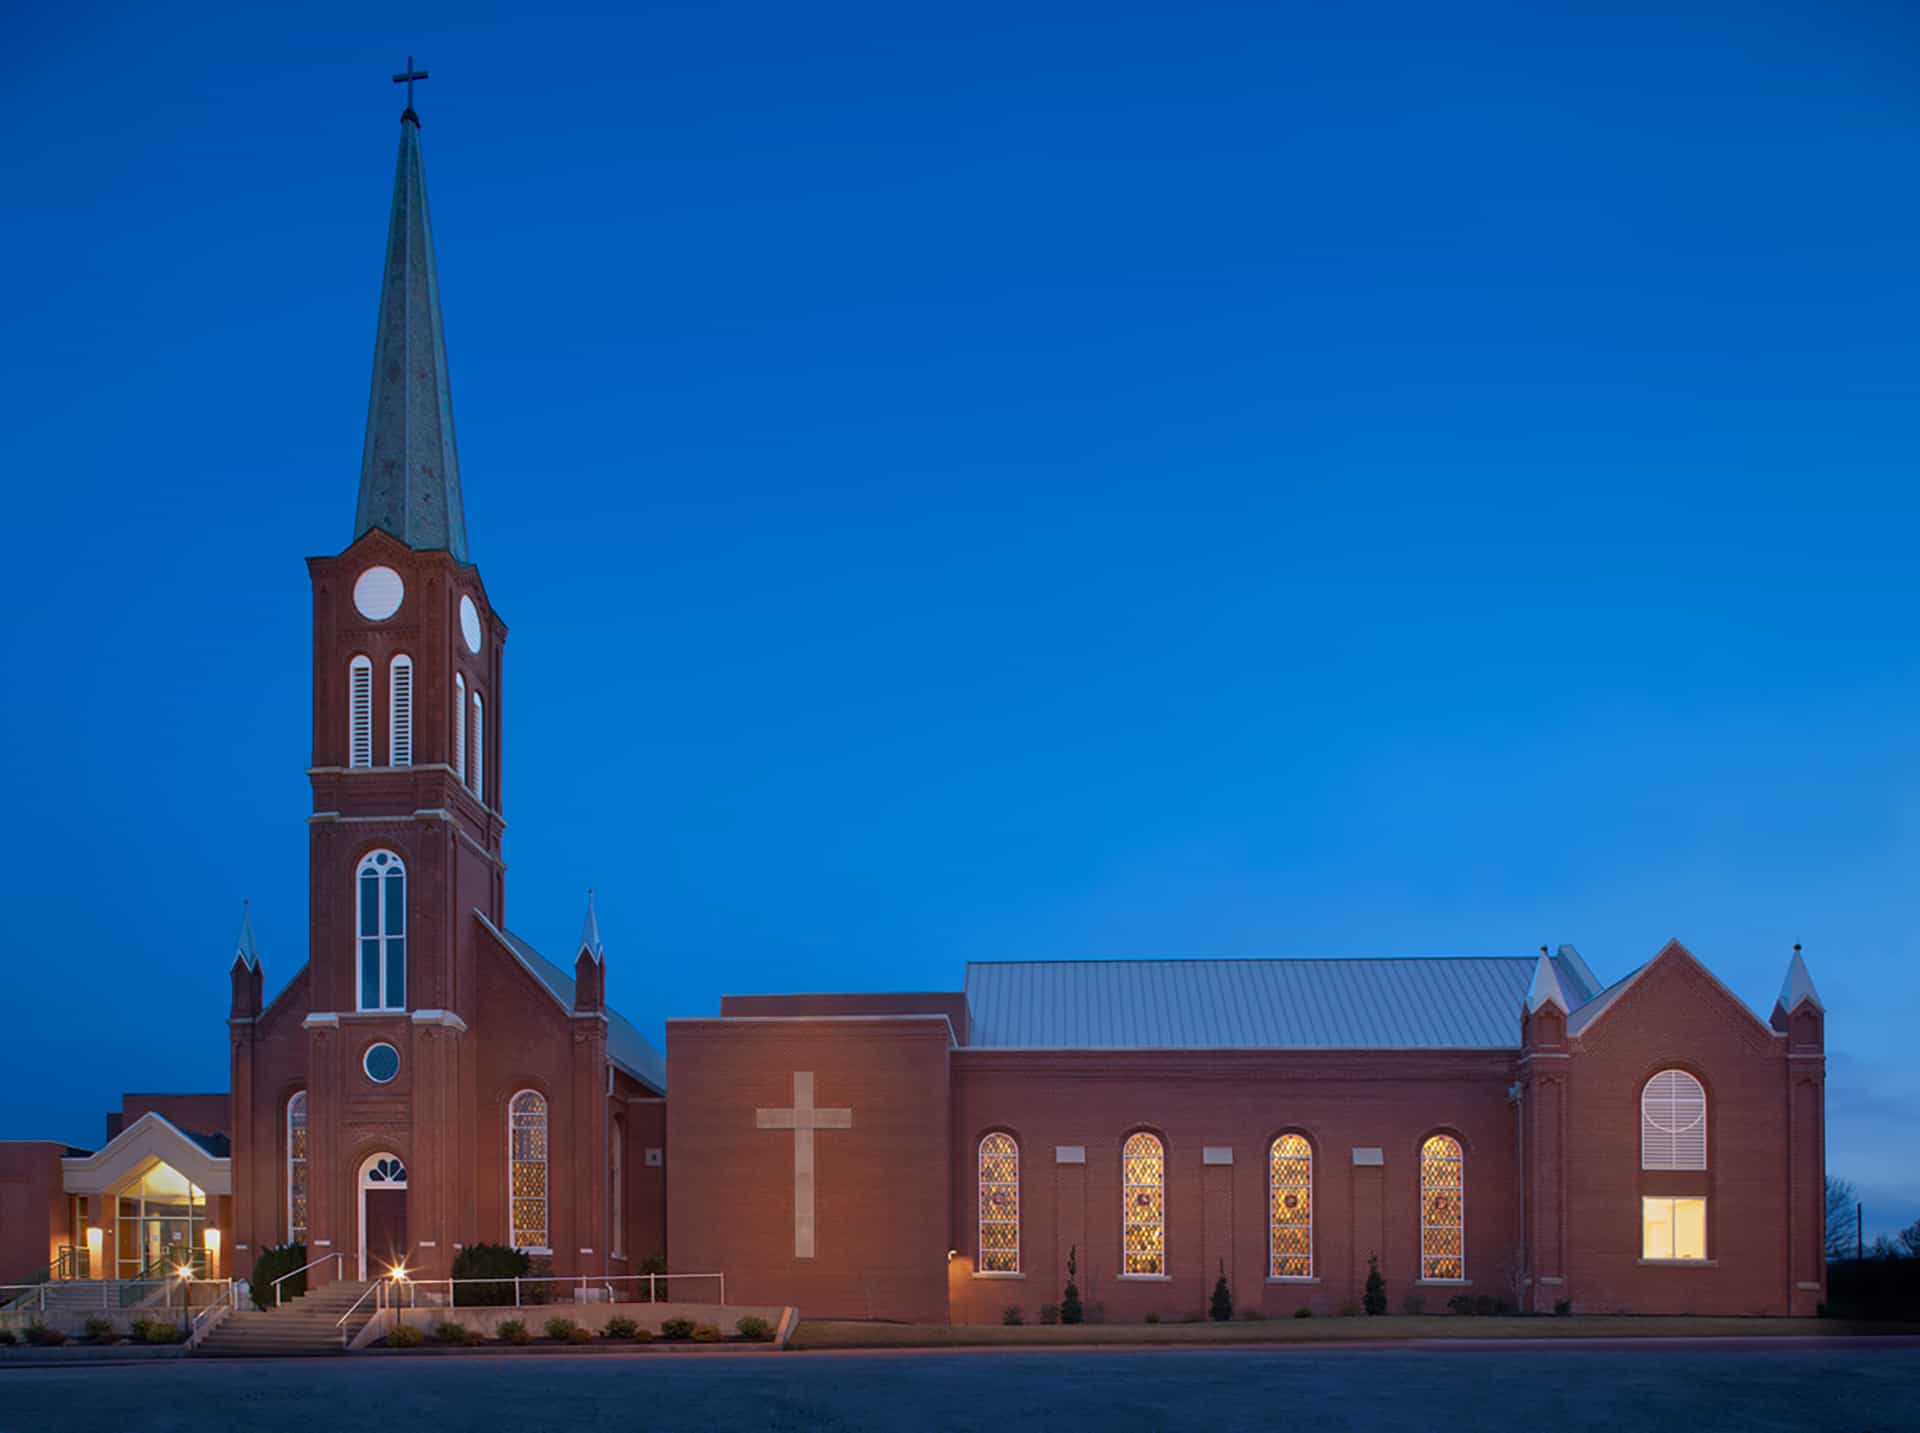 Immanuel Lutheran Church at night